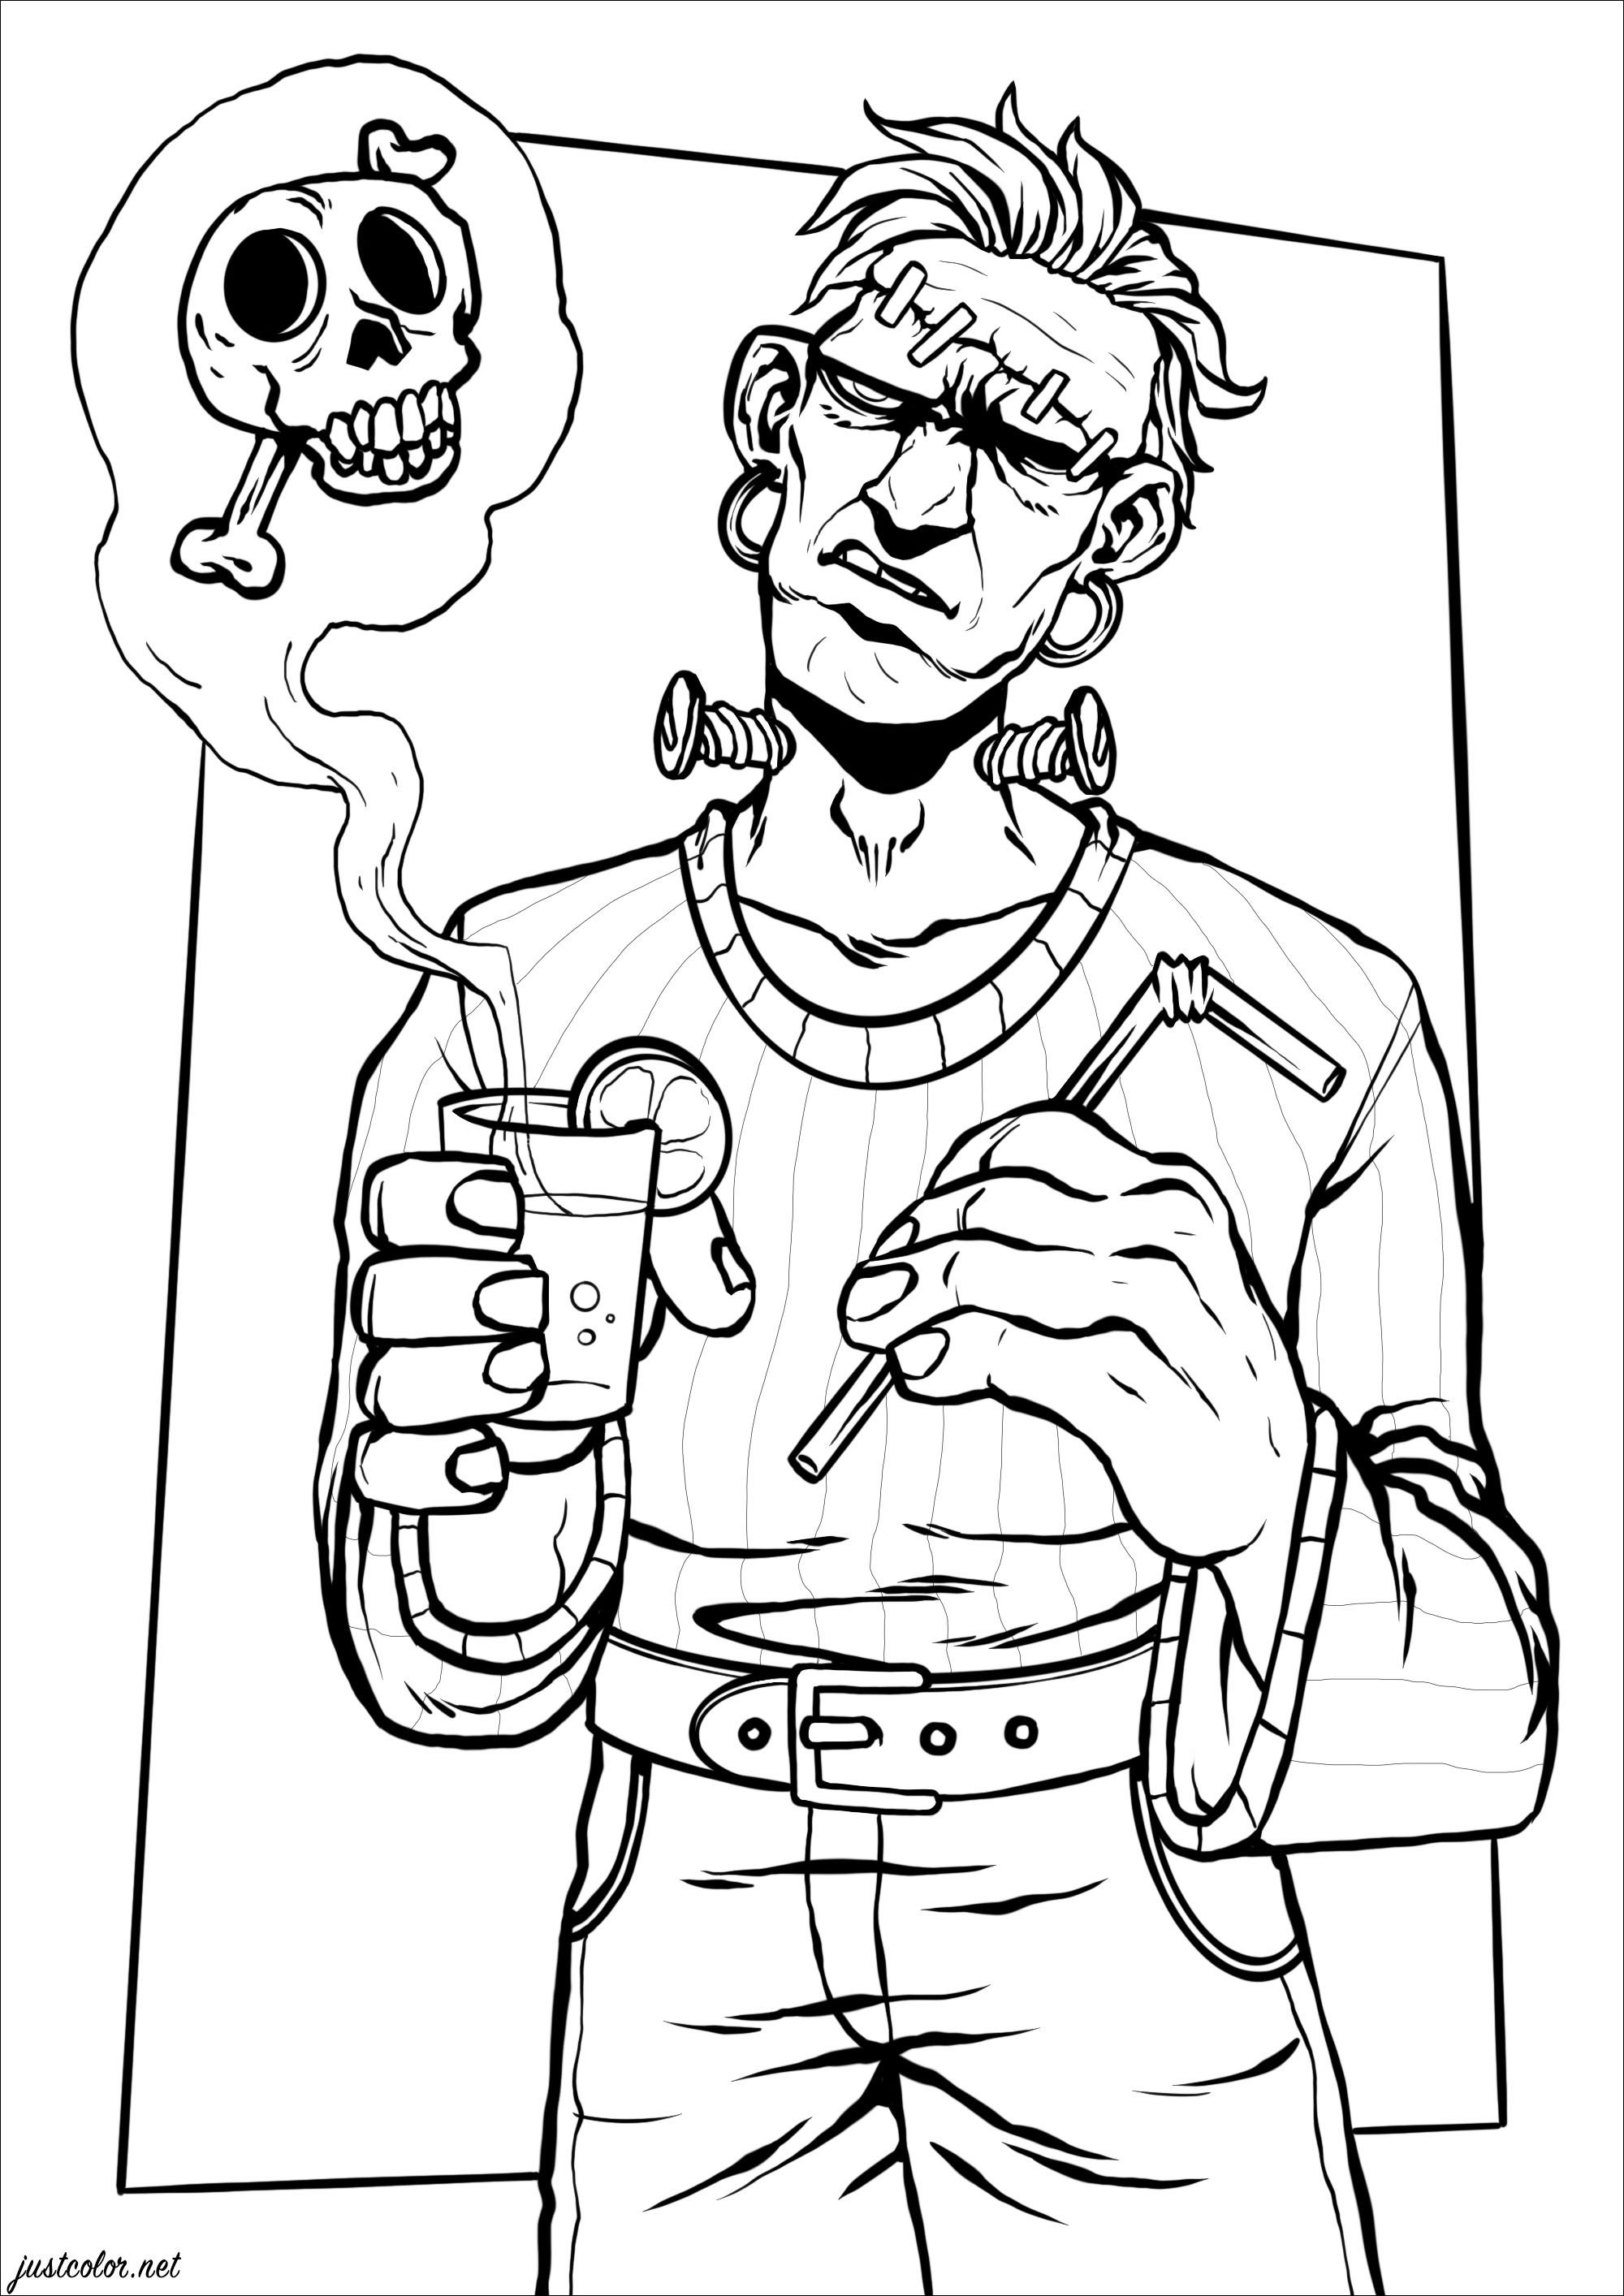 Frankenstein drinks a strange potion - Halloween Adult Coloring Pages